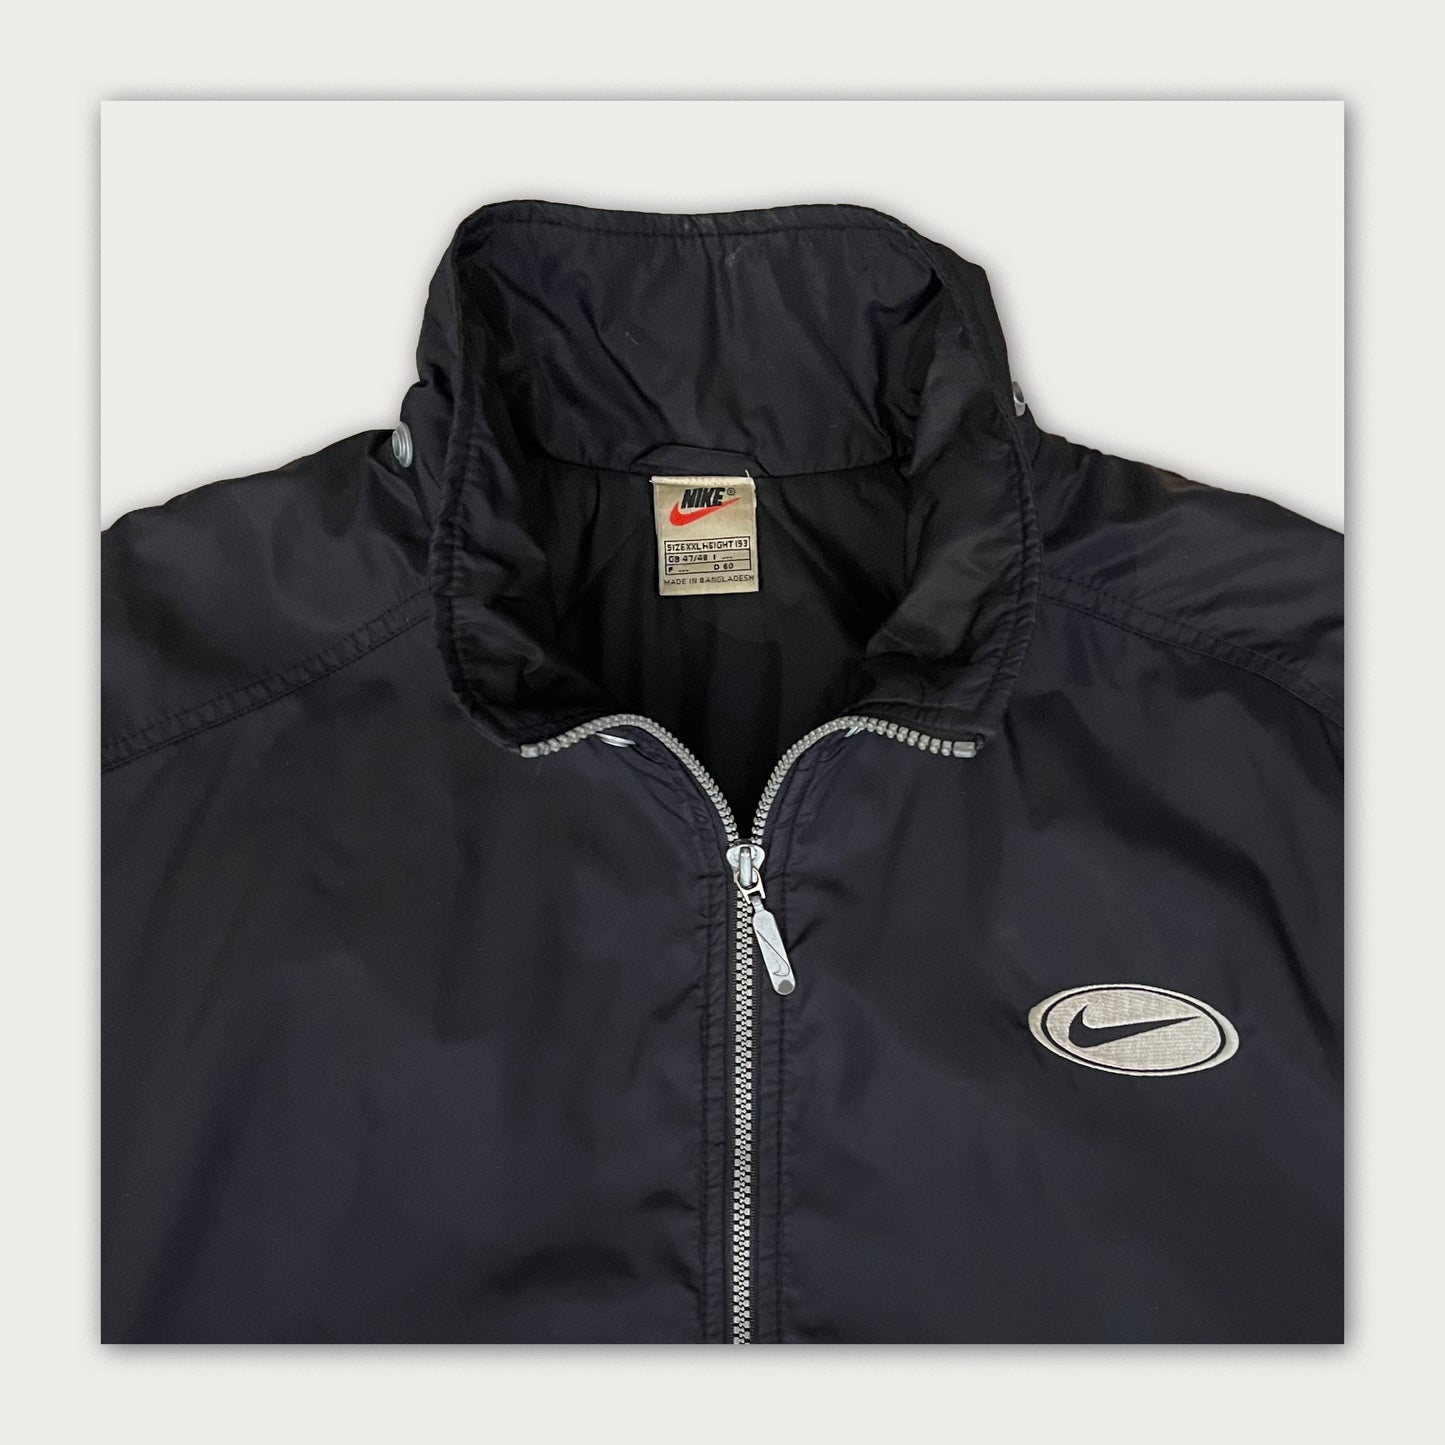 Late 90s Nike Jacket